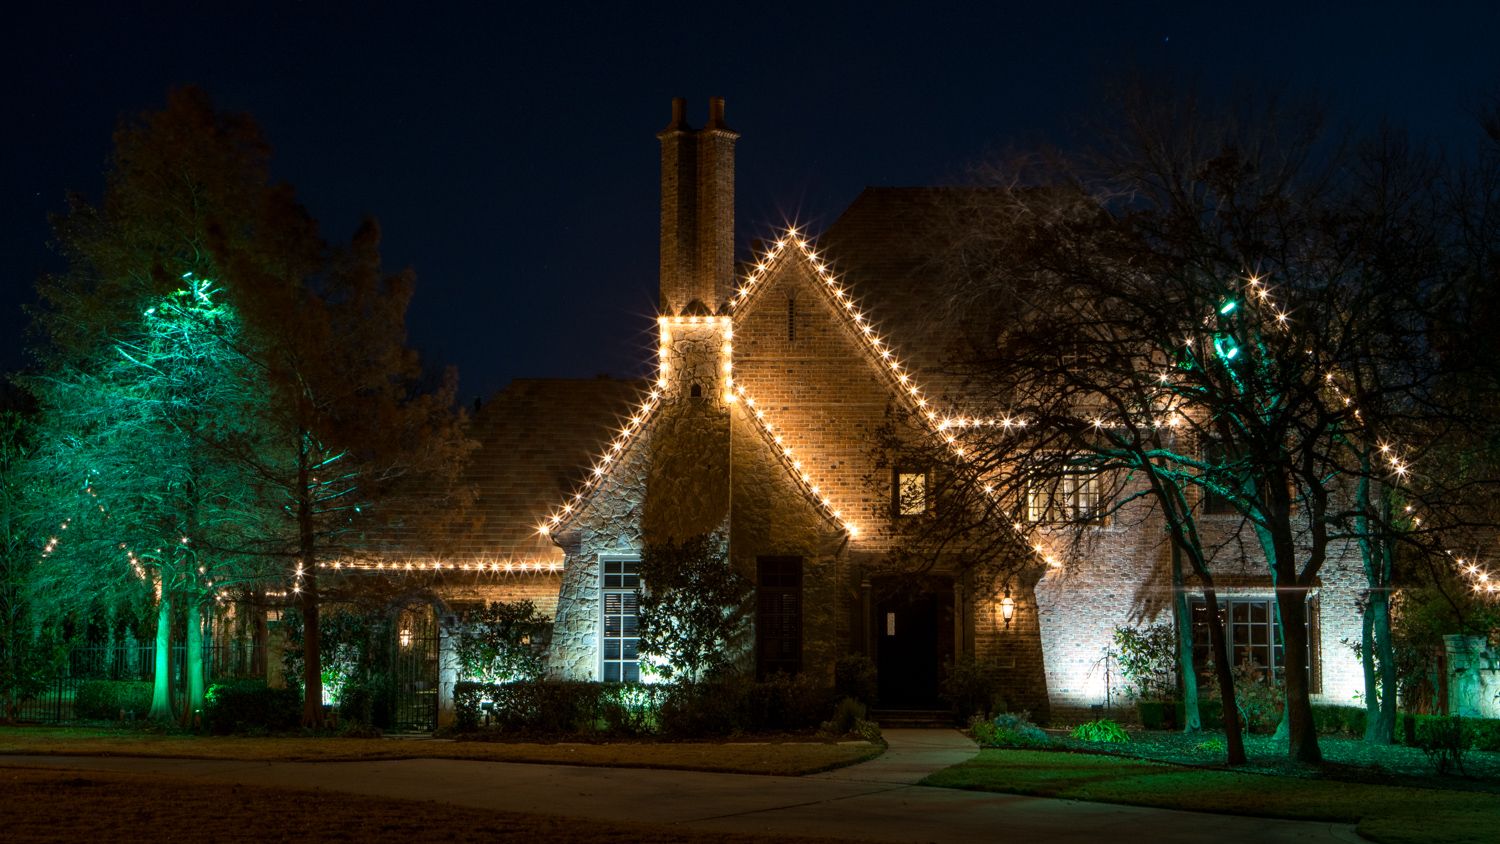 professional holiday lighting display on house